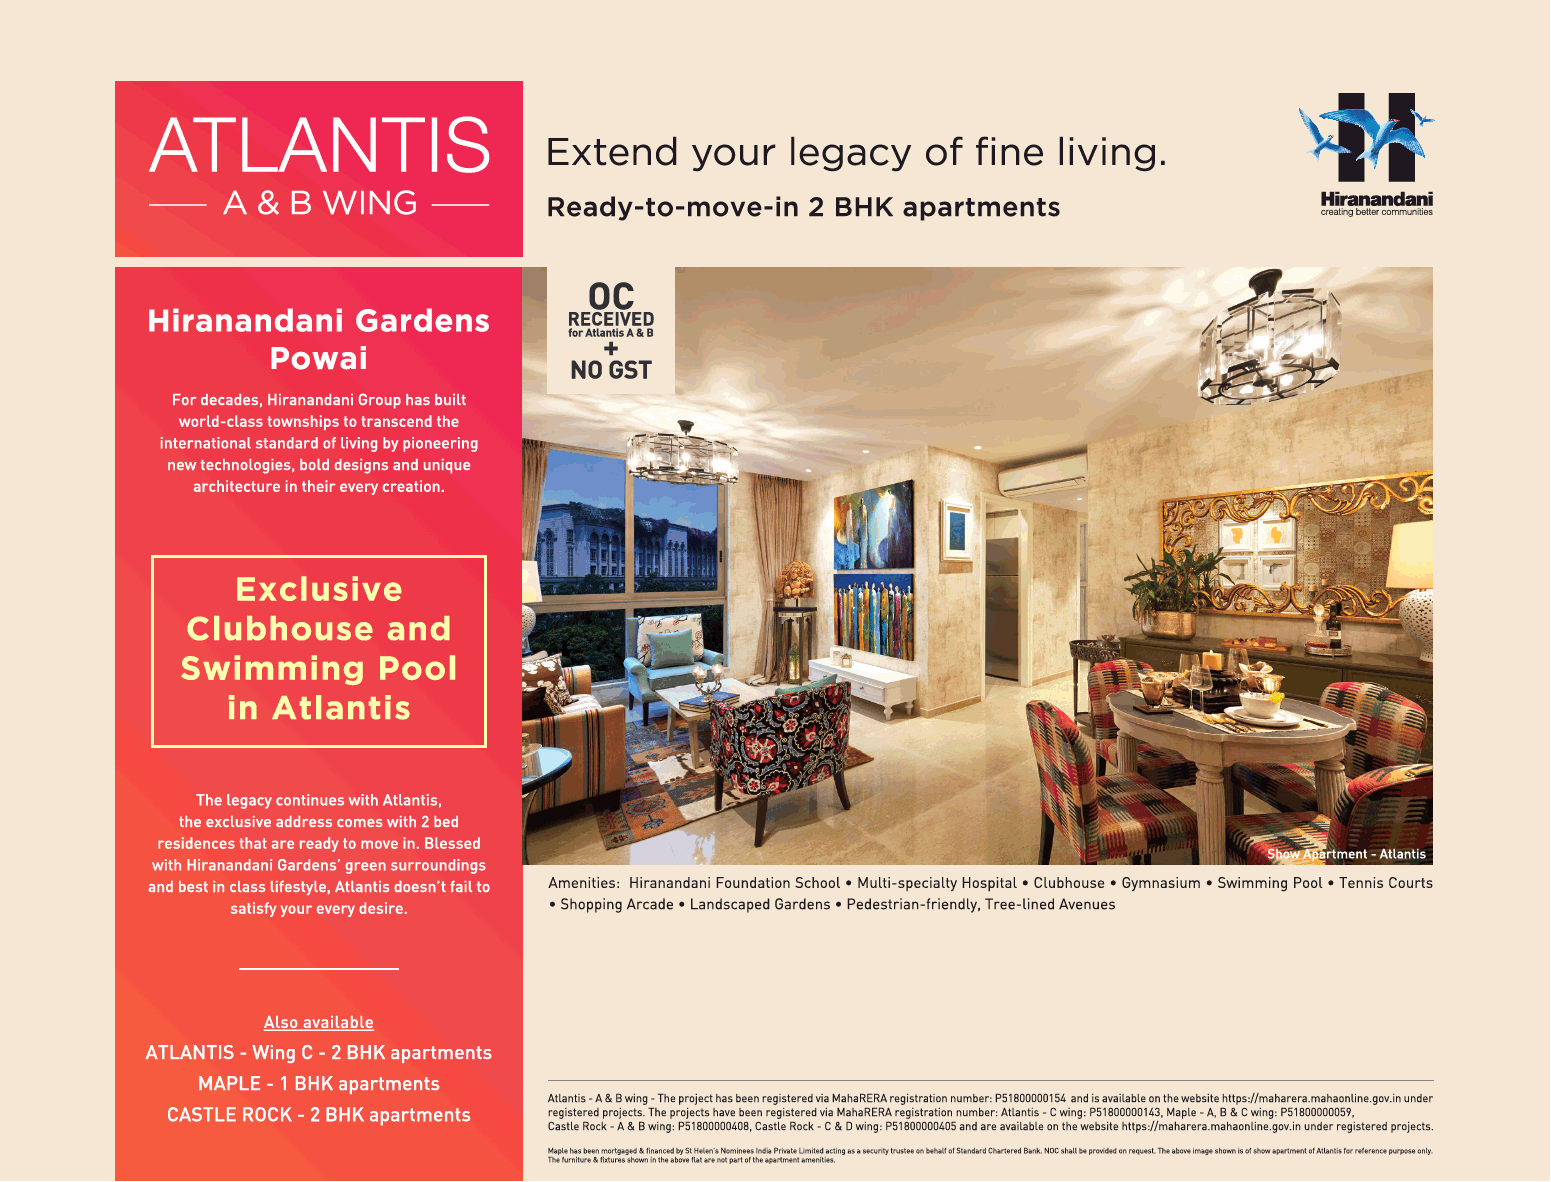 Extend your legacy of fine livings at Hiranandani Atlantis in Mumbai Update